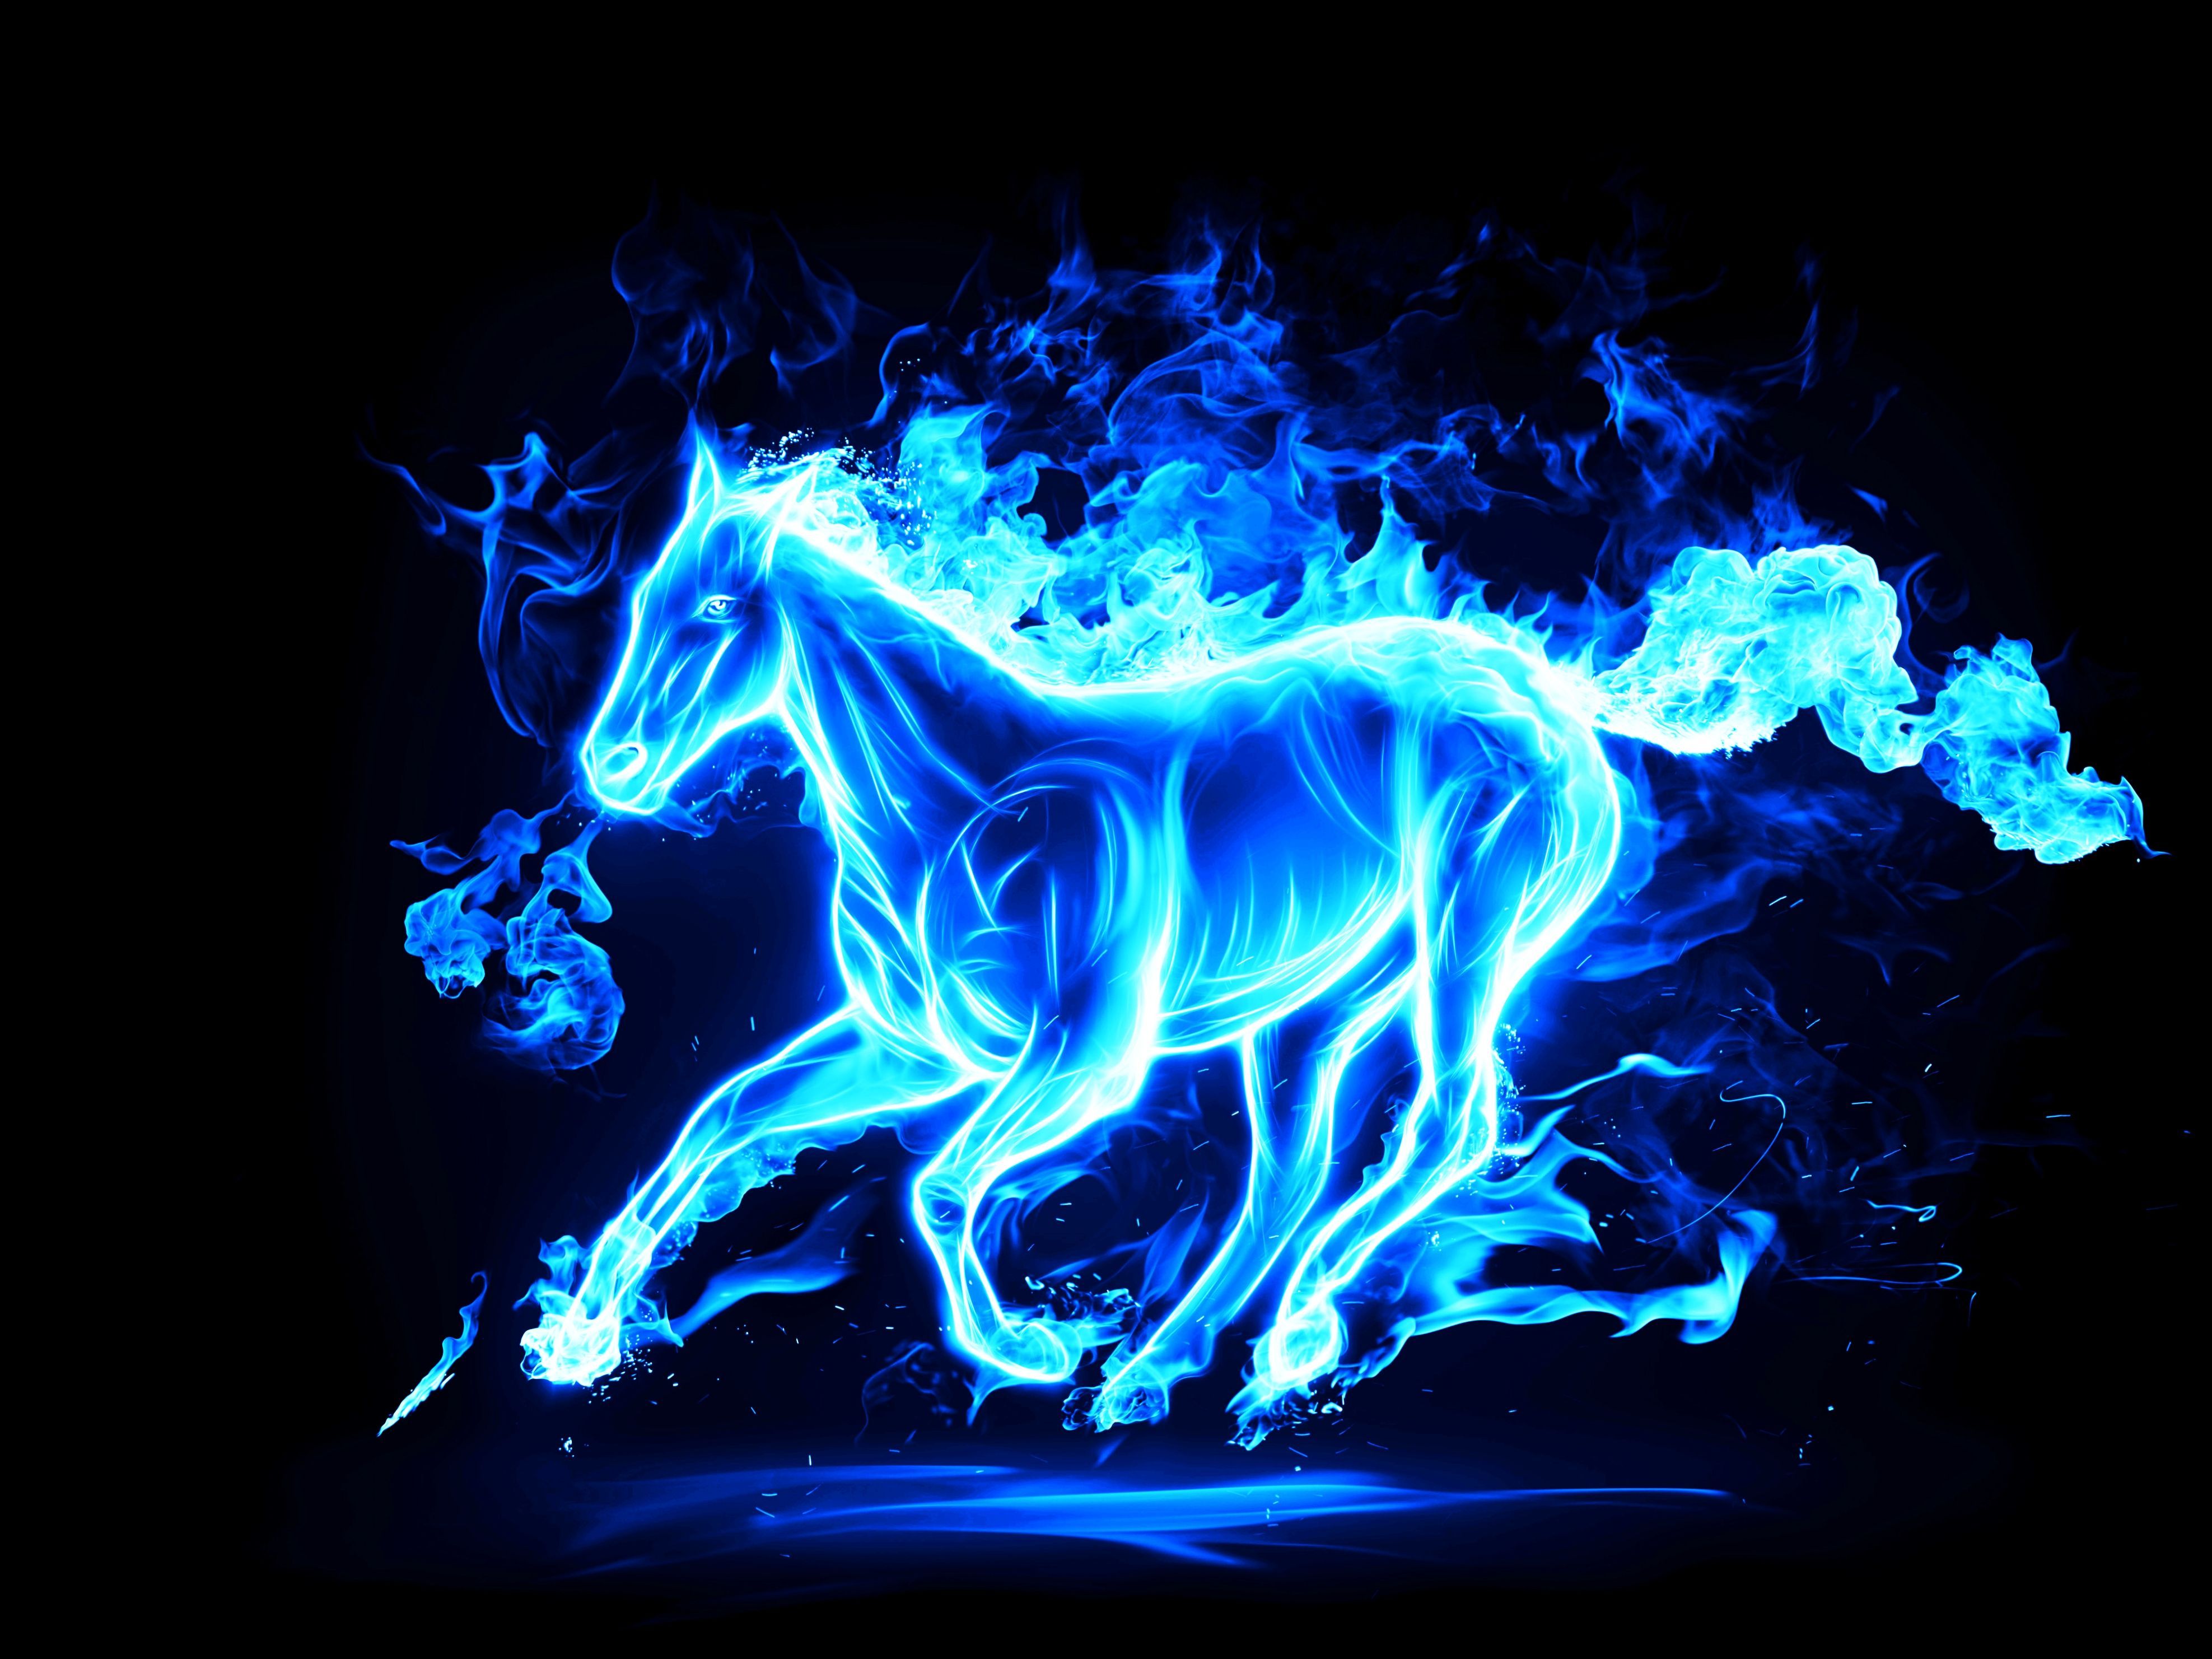 Blue Fire Wallpaper 1080p with HD Deskx2962 px 3.68 MB. Fire horse, Abstract horse, Horse wallpaper